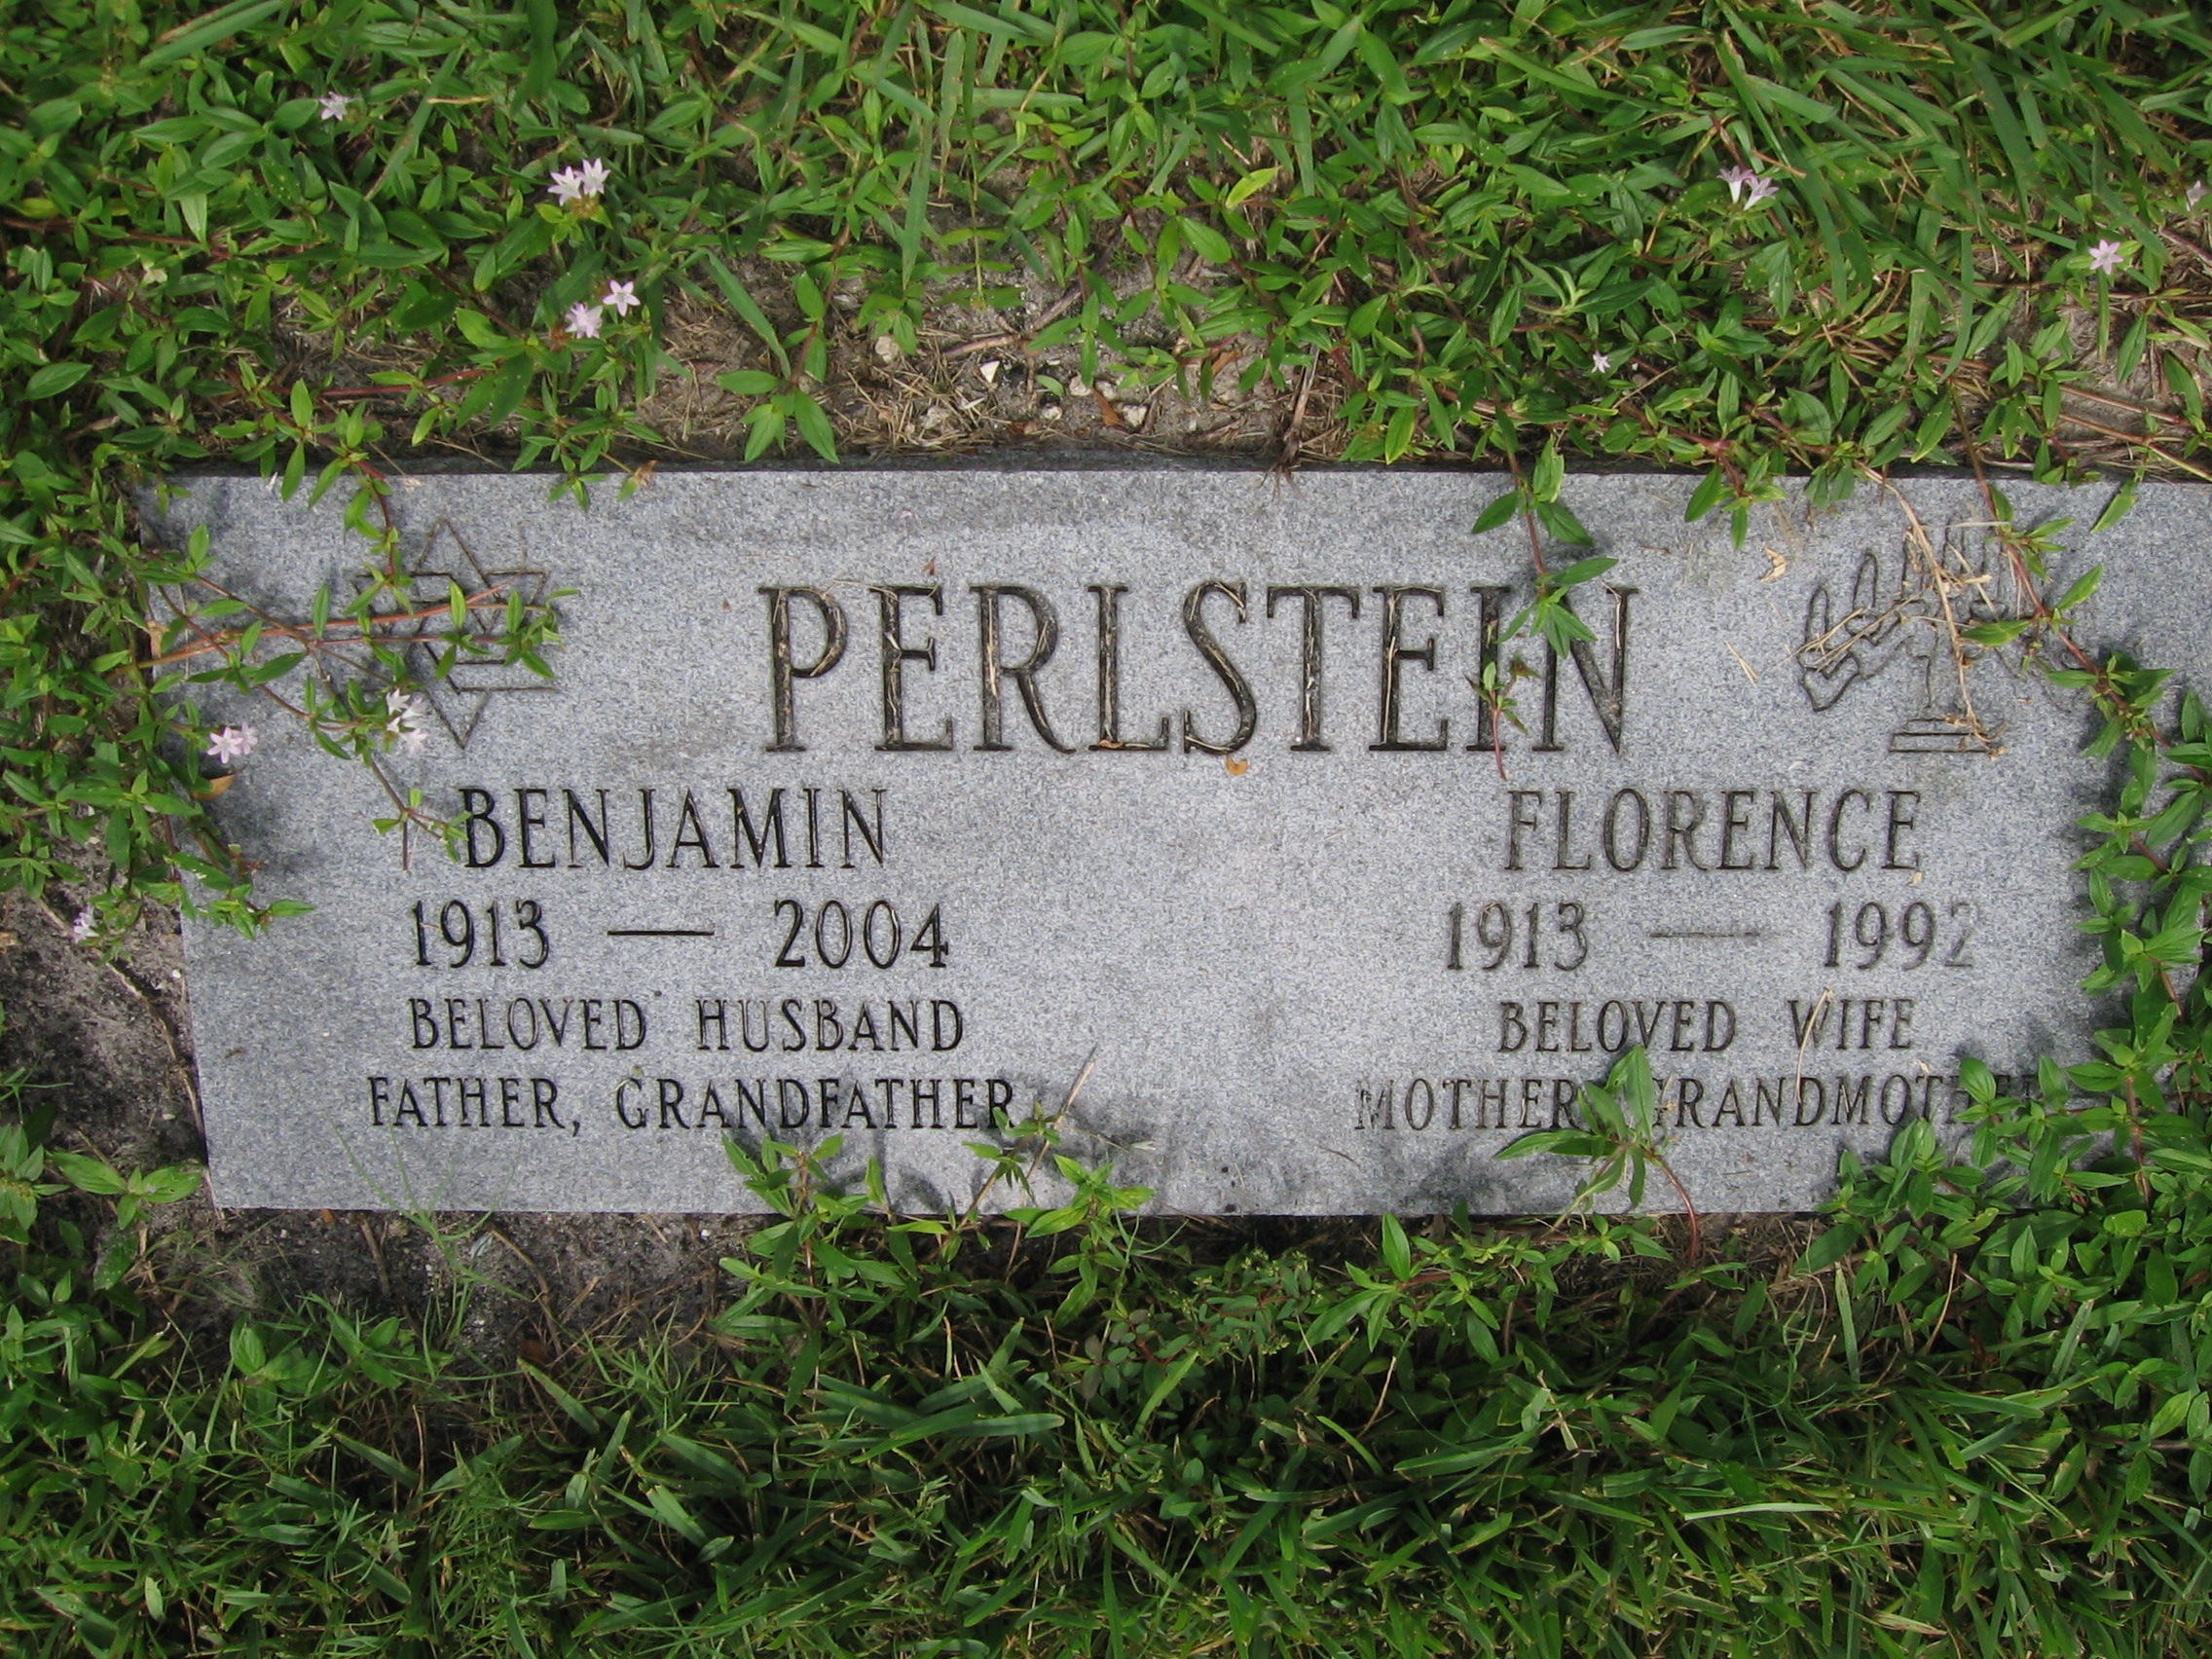 Benjamin Perlstein